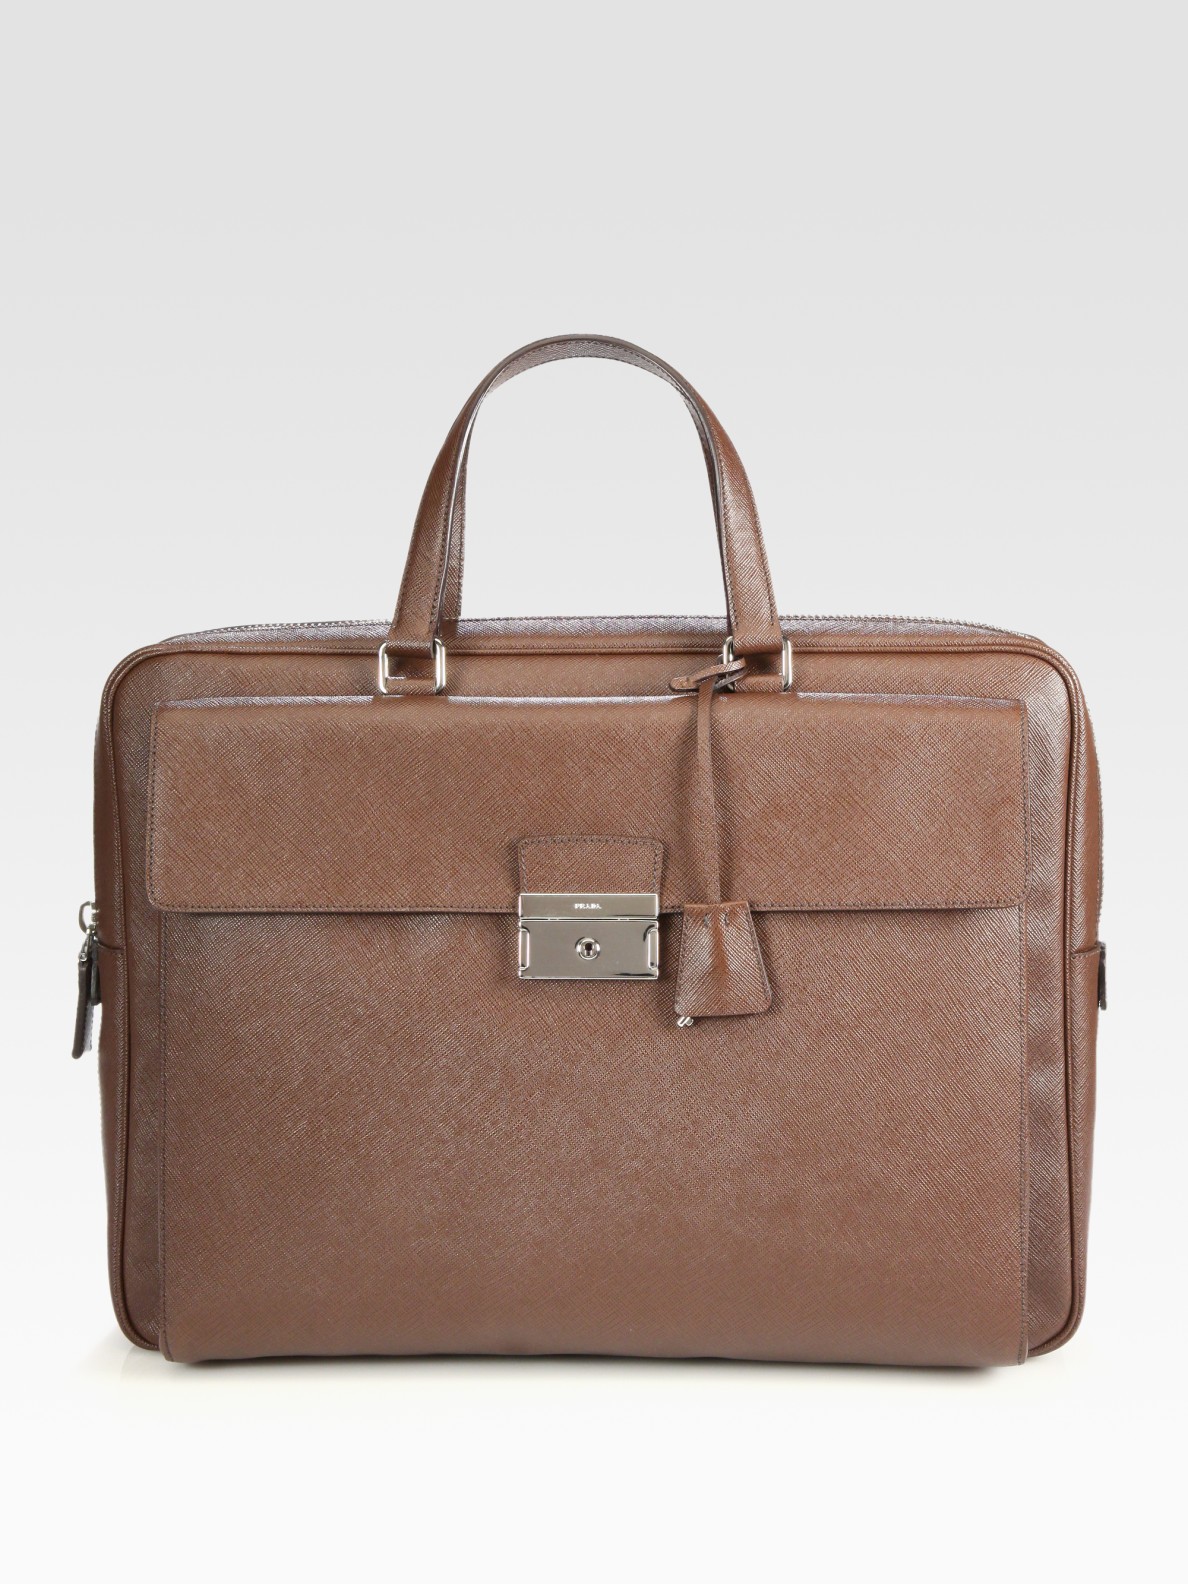 Prada Saffiano Leather Briefcase in Beige for Men (tan) | Lyst